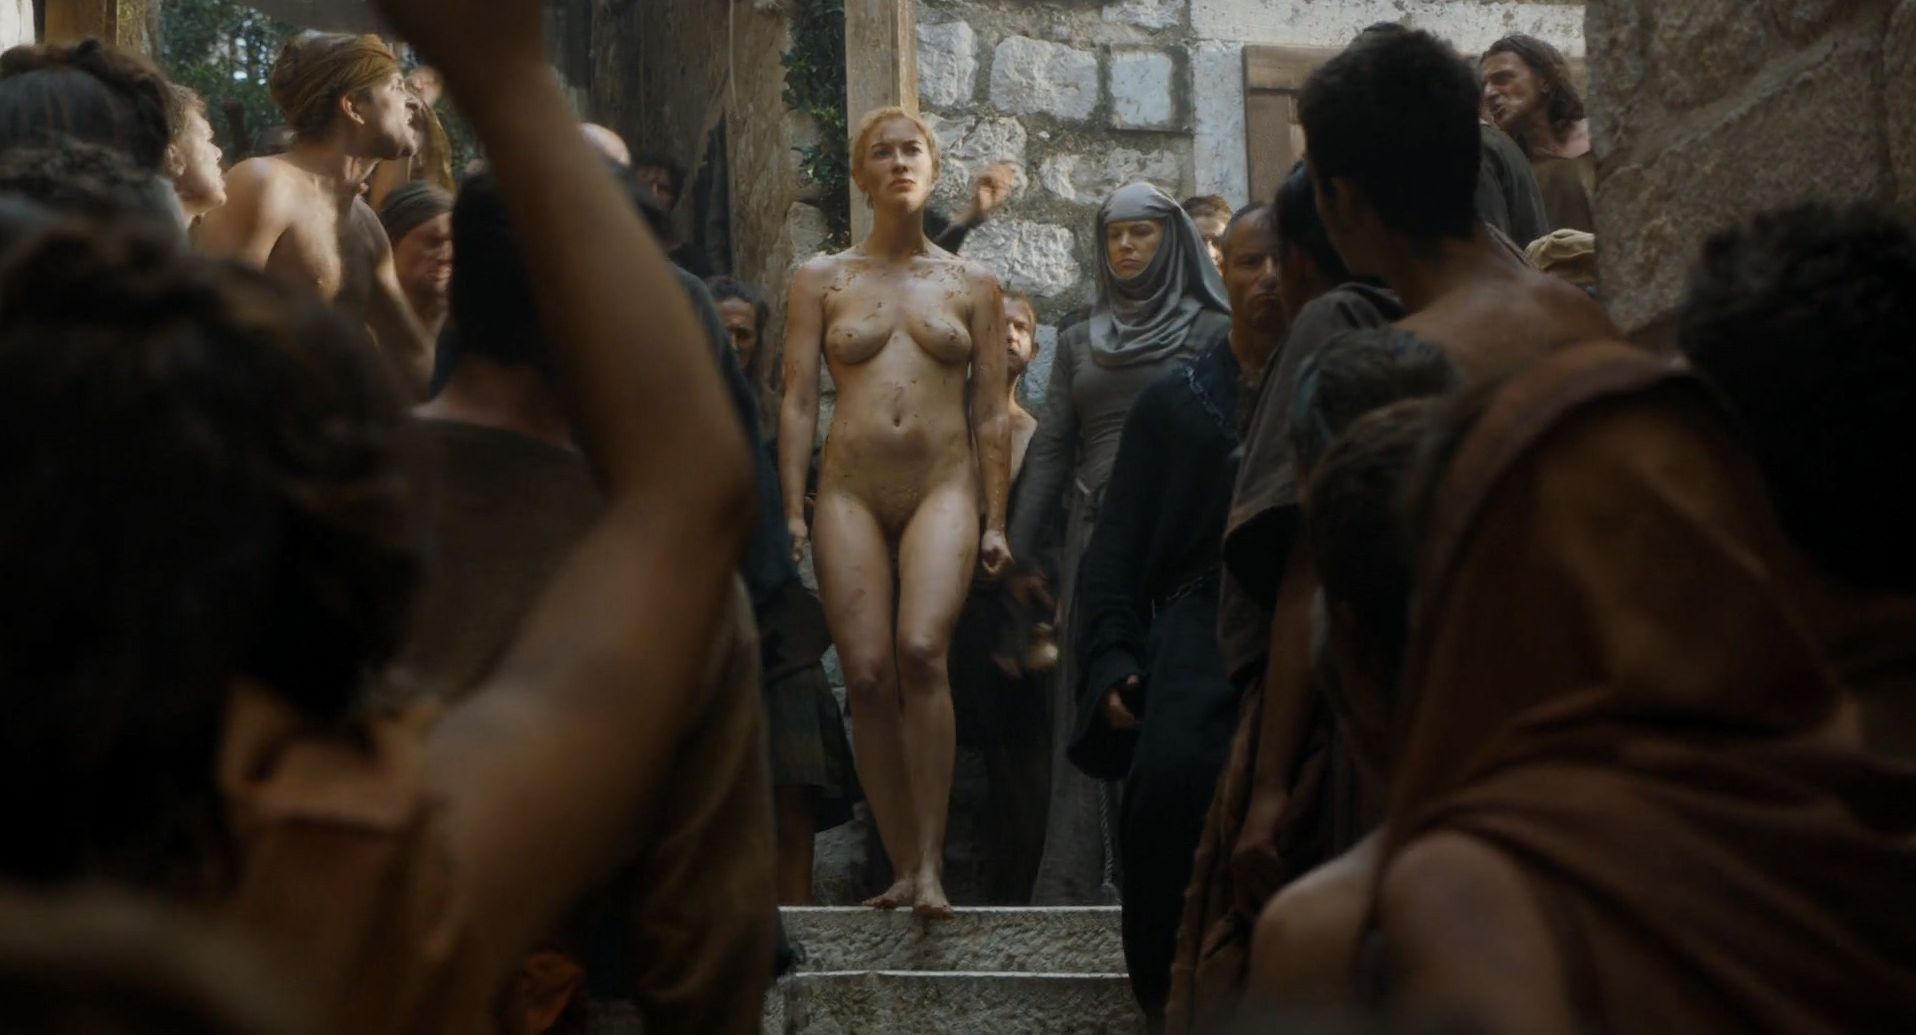 Lena Headey Naked - Game of Thrones (15 Photos + Video)